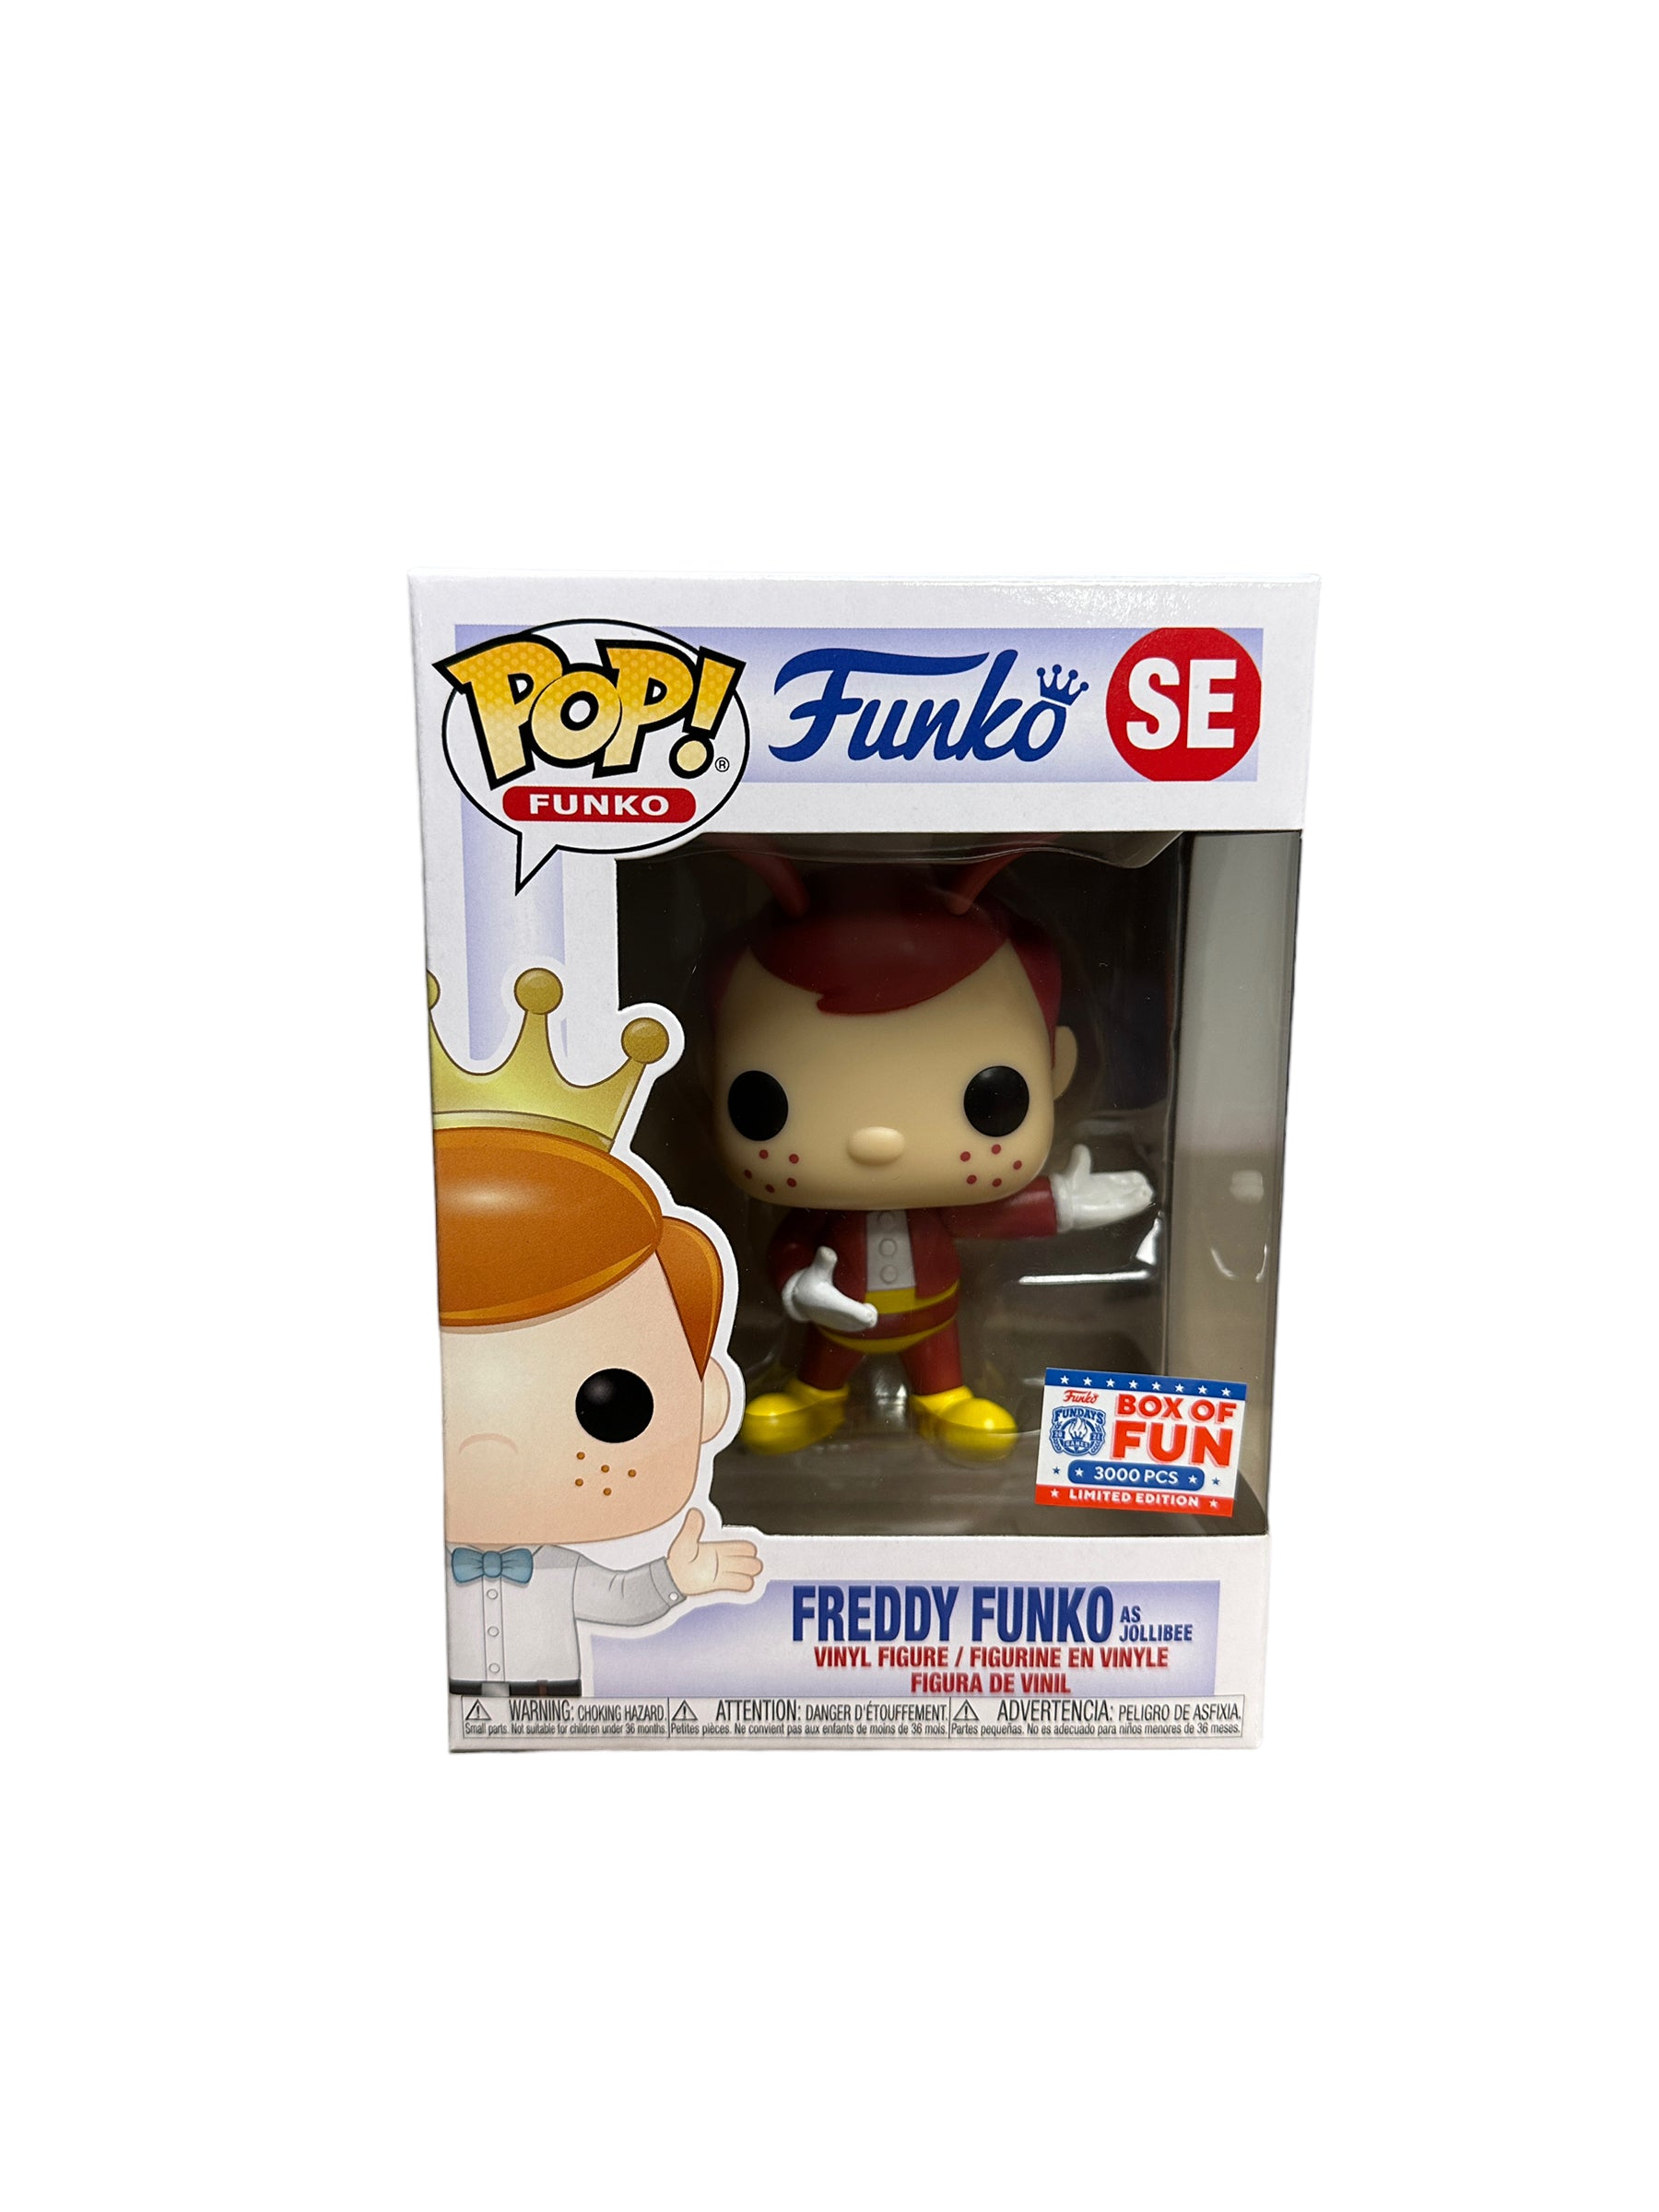 Freddy Funko as Jollibee Funko Pop! - Fundays 2021 Box of Fun Exclusive LE3000 Pcs - Condition 9.5/10